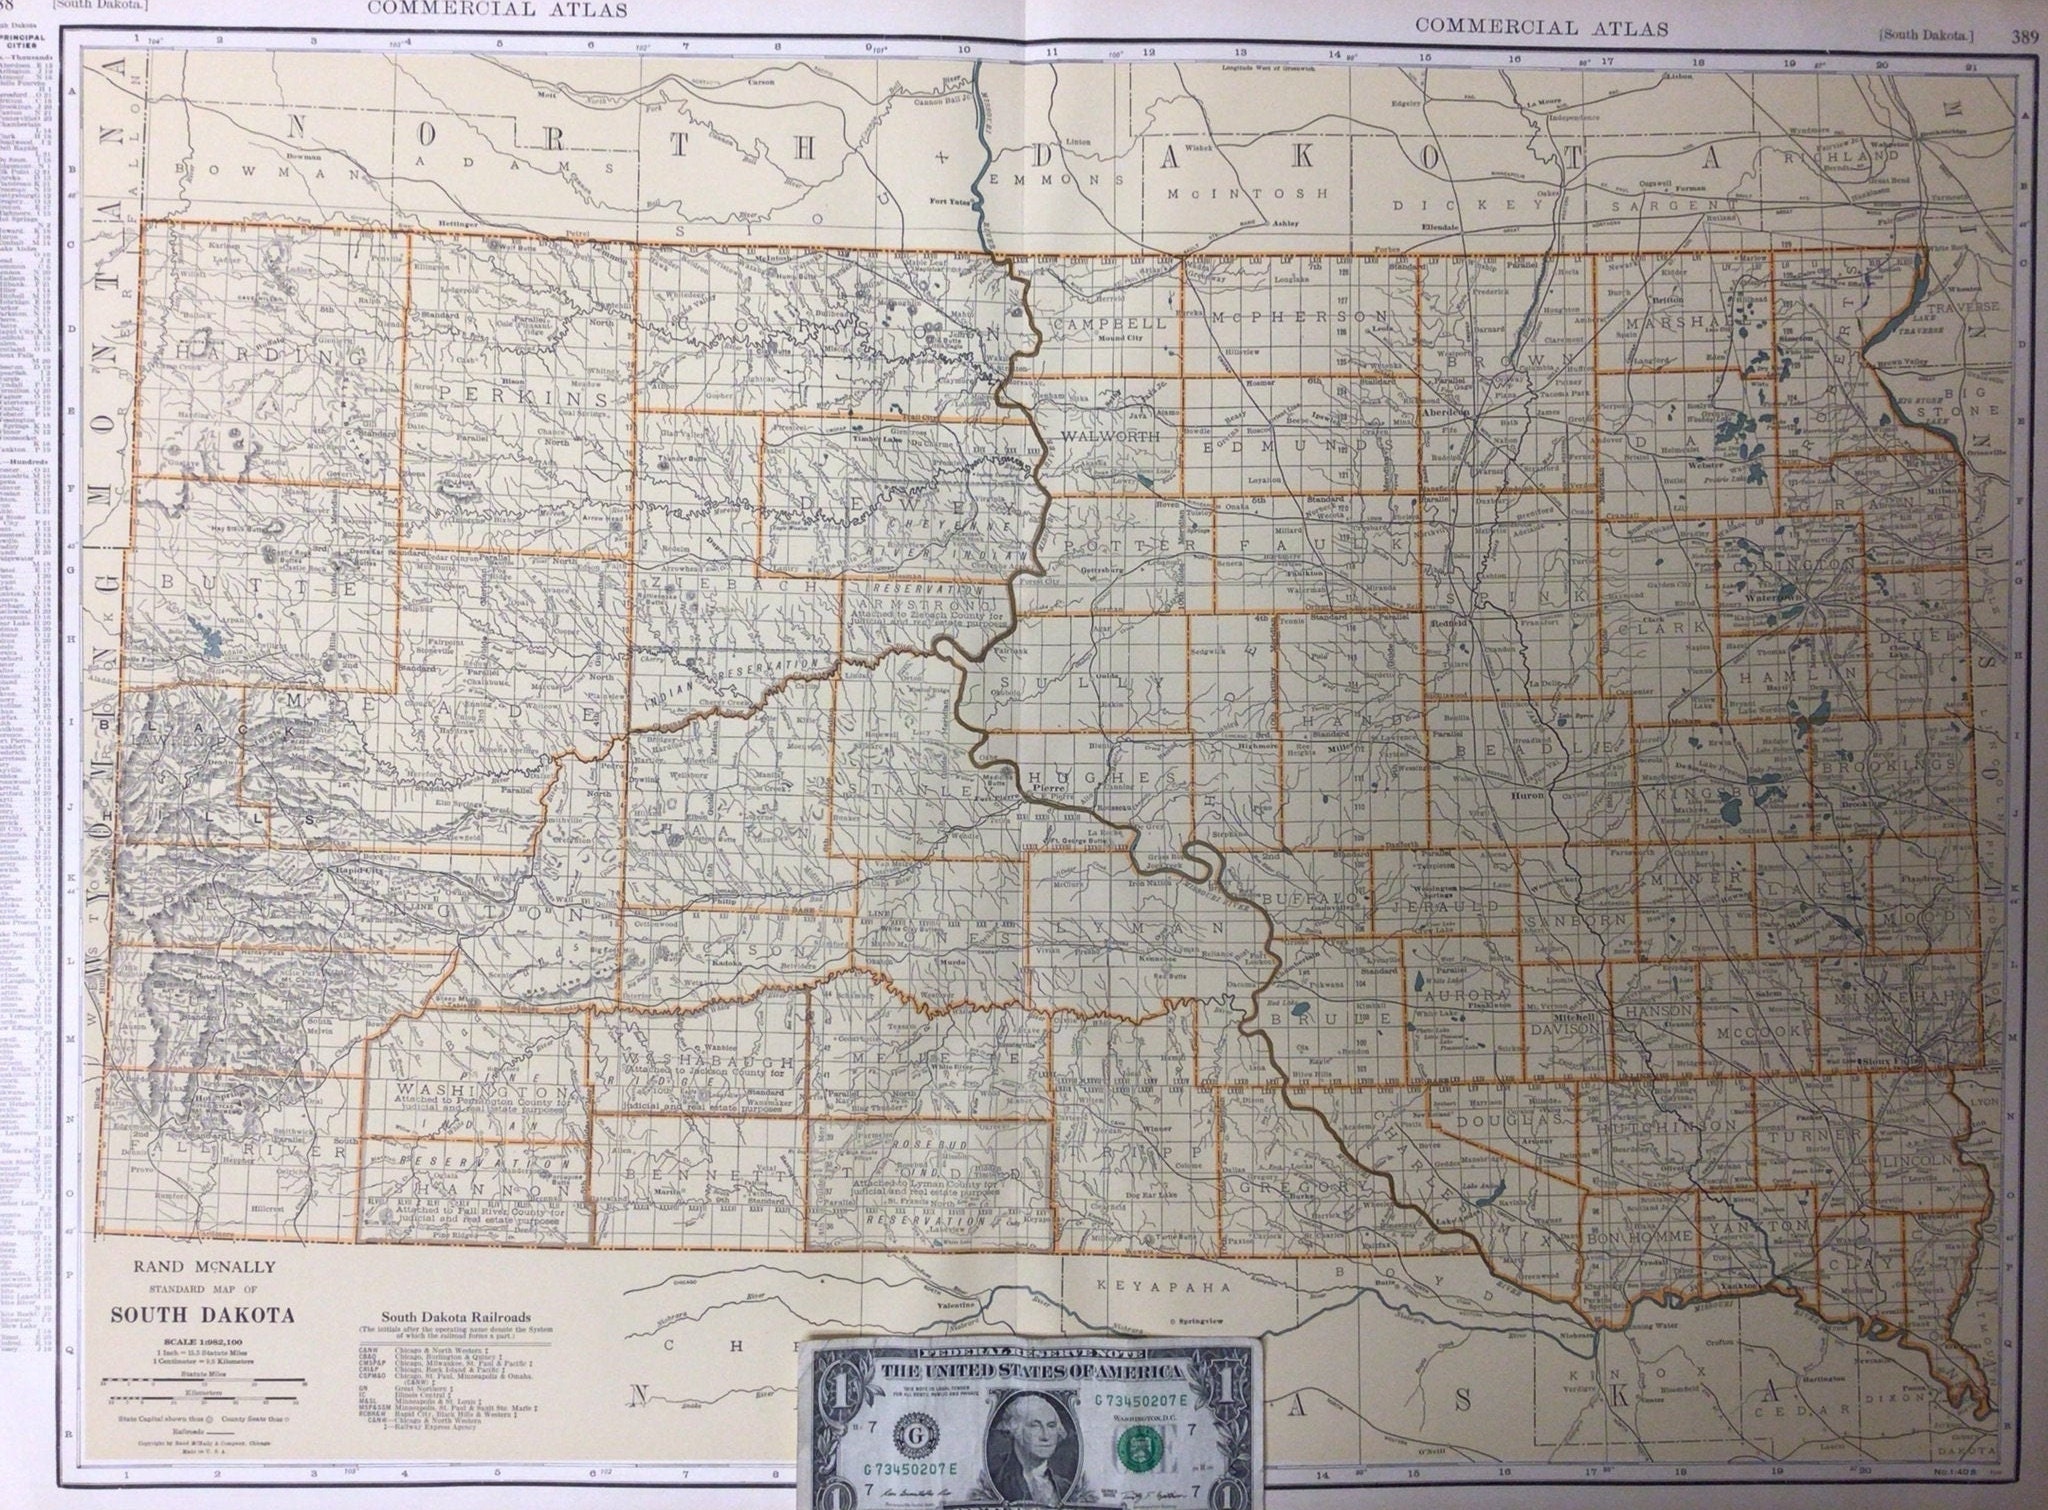 1931 Antique Map of South Dakota sioux Falls Deadwood pic